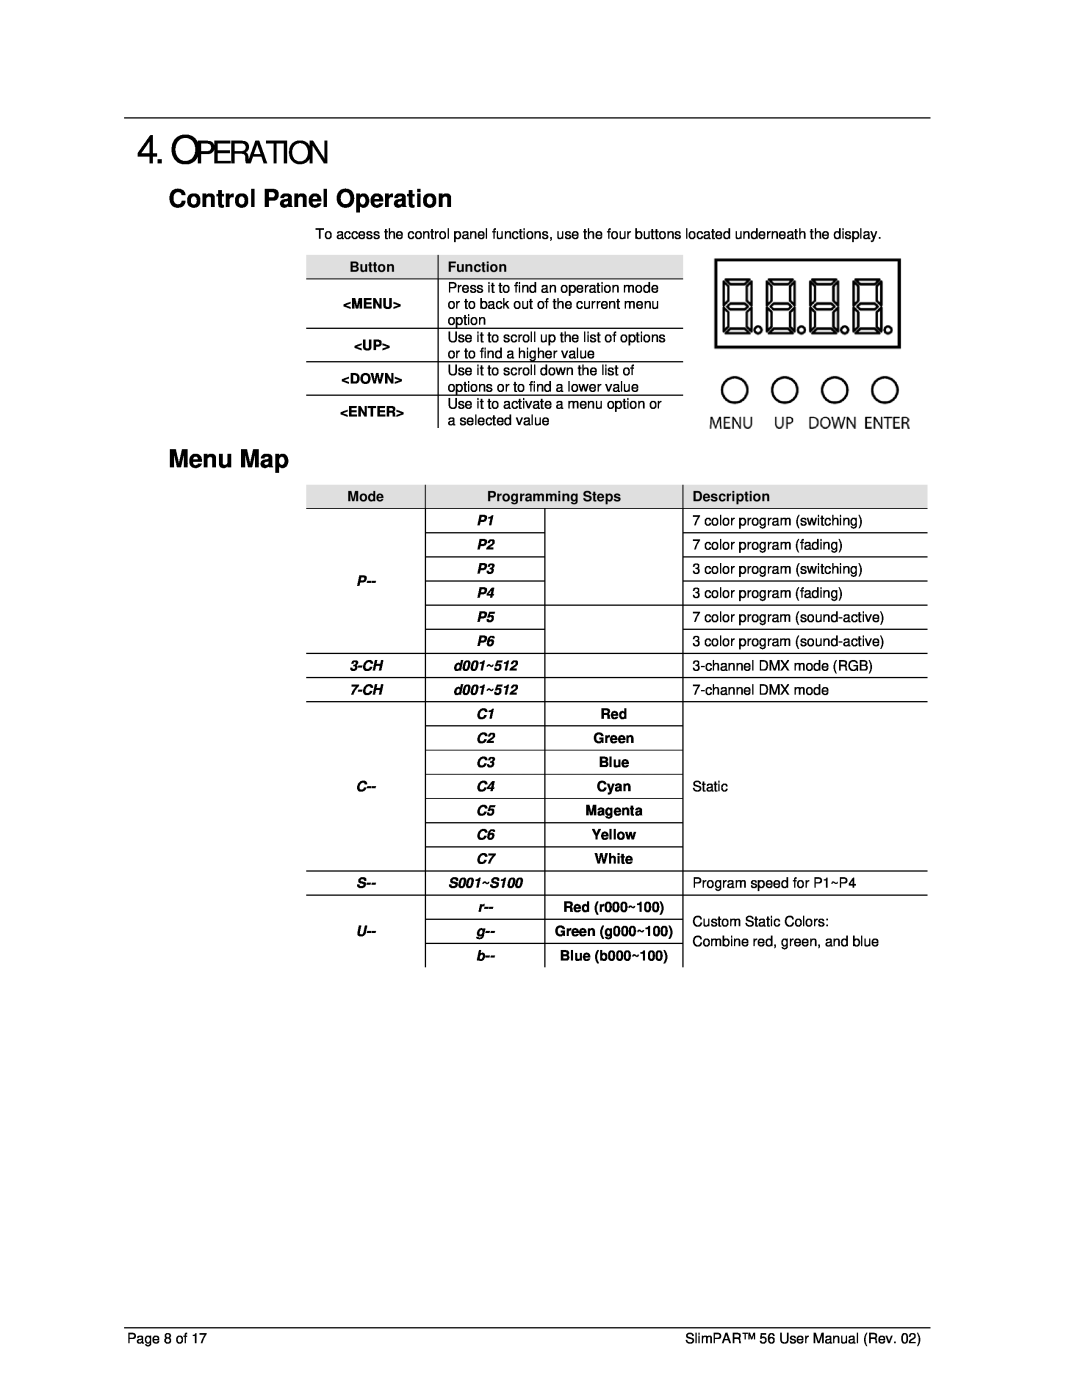 Chauvet 56 user manual Control Panel Operation, Menu Map, d001~512, S001~S100 